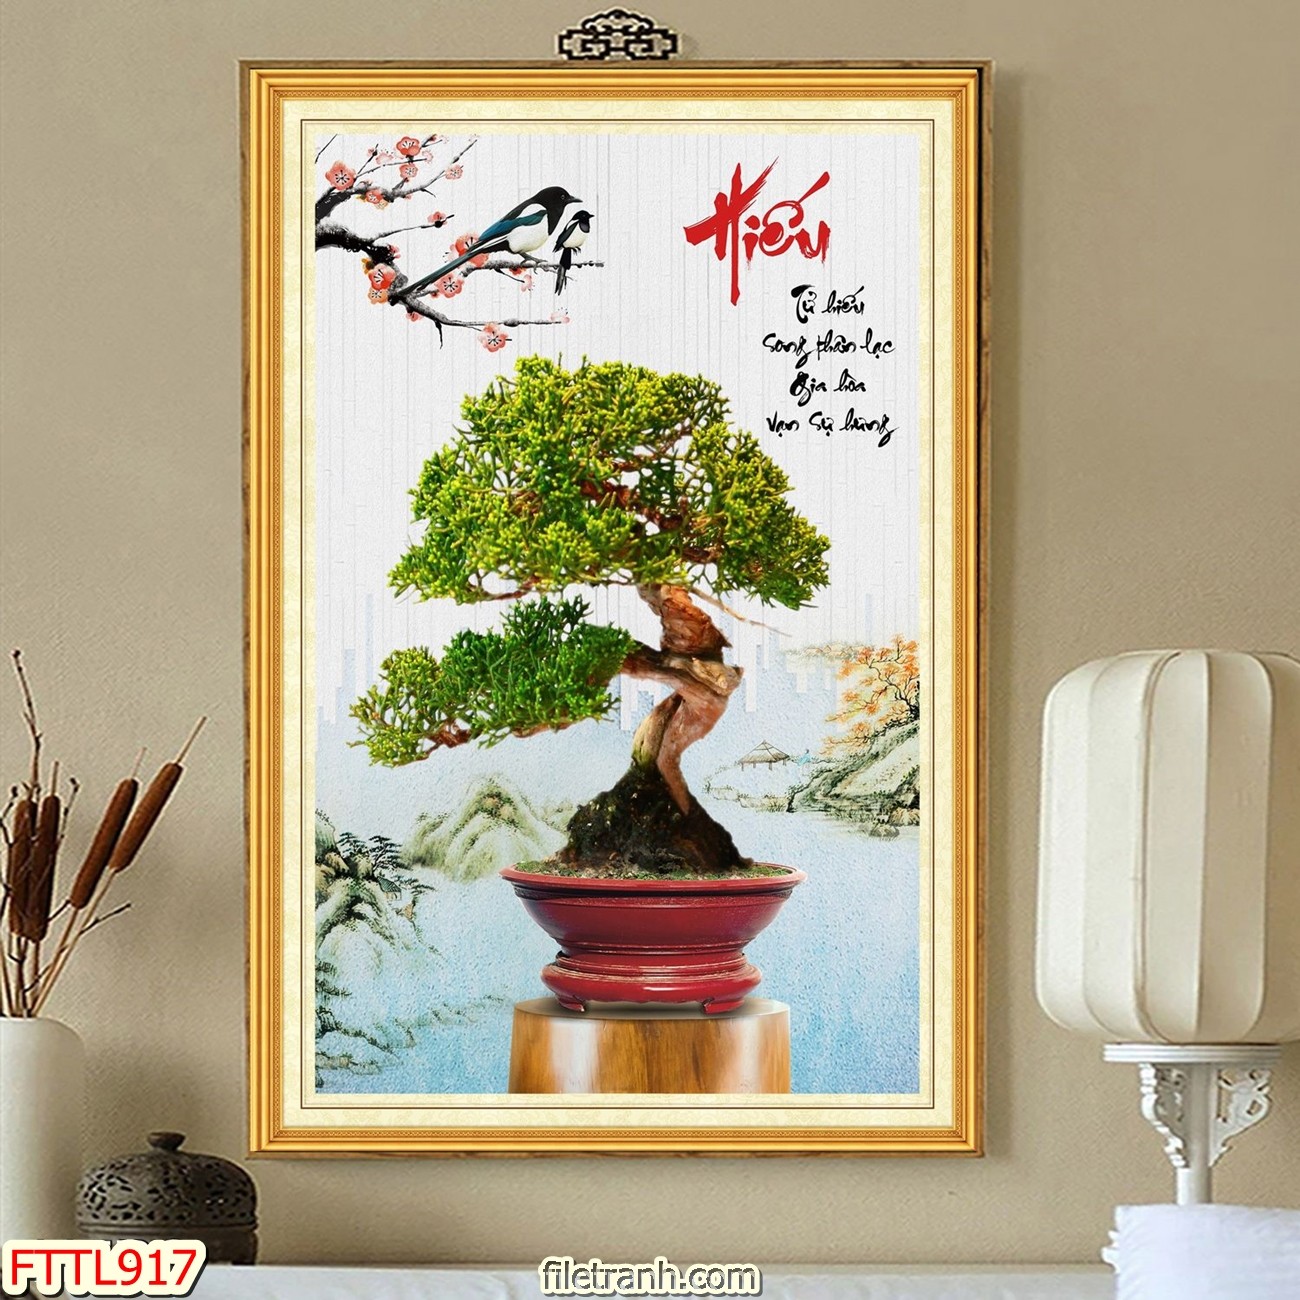 http://filetranh.com/file-tranh-chau-mai-bonsai/file-tranh-chau-mai-bonsai-fttl917.html